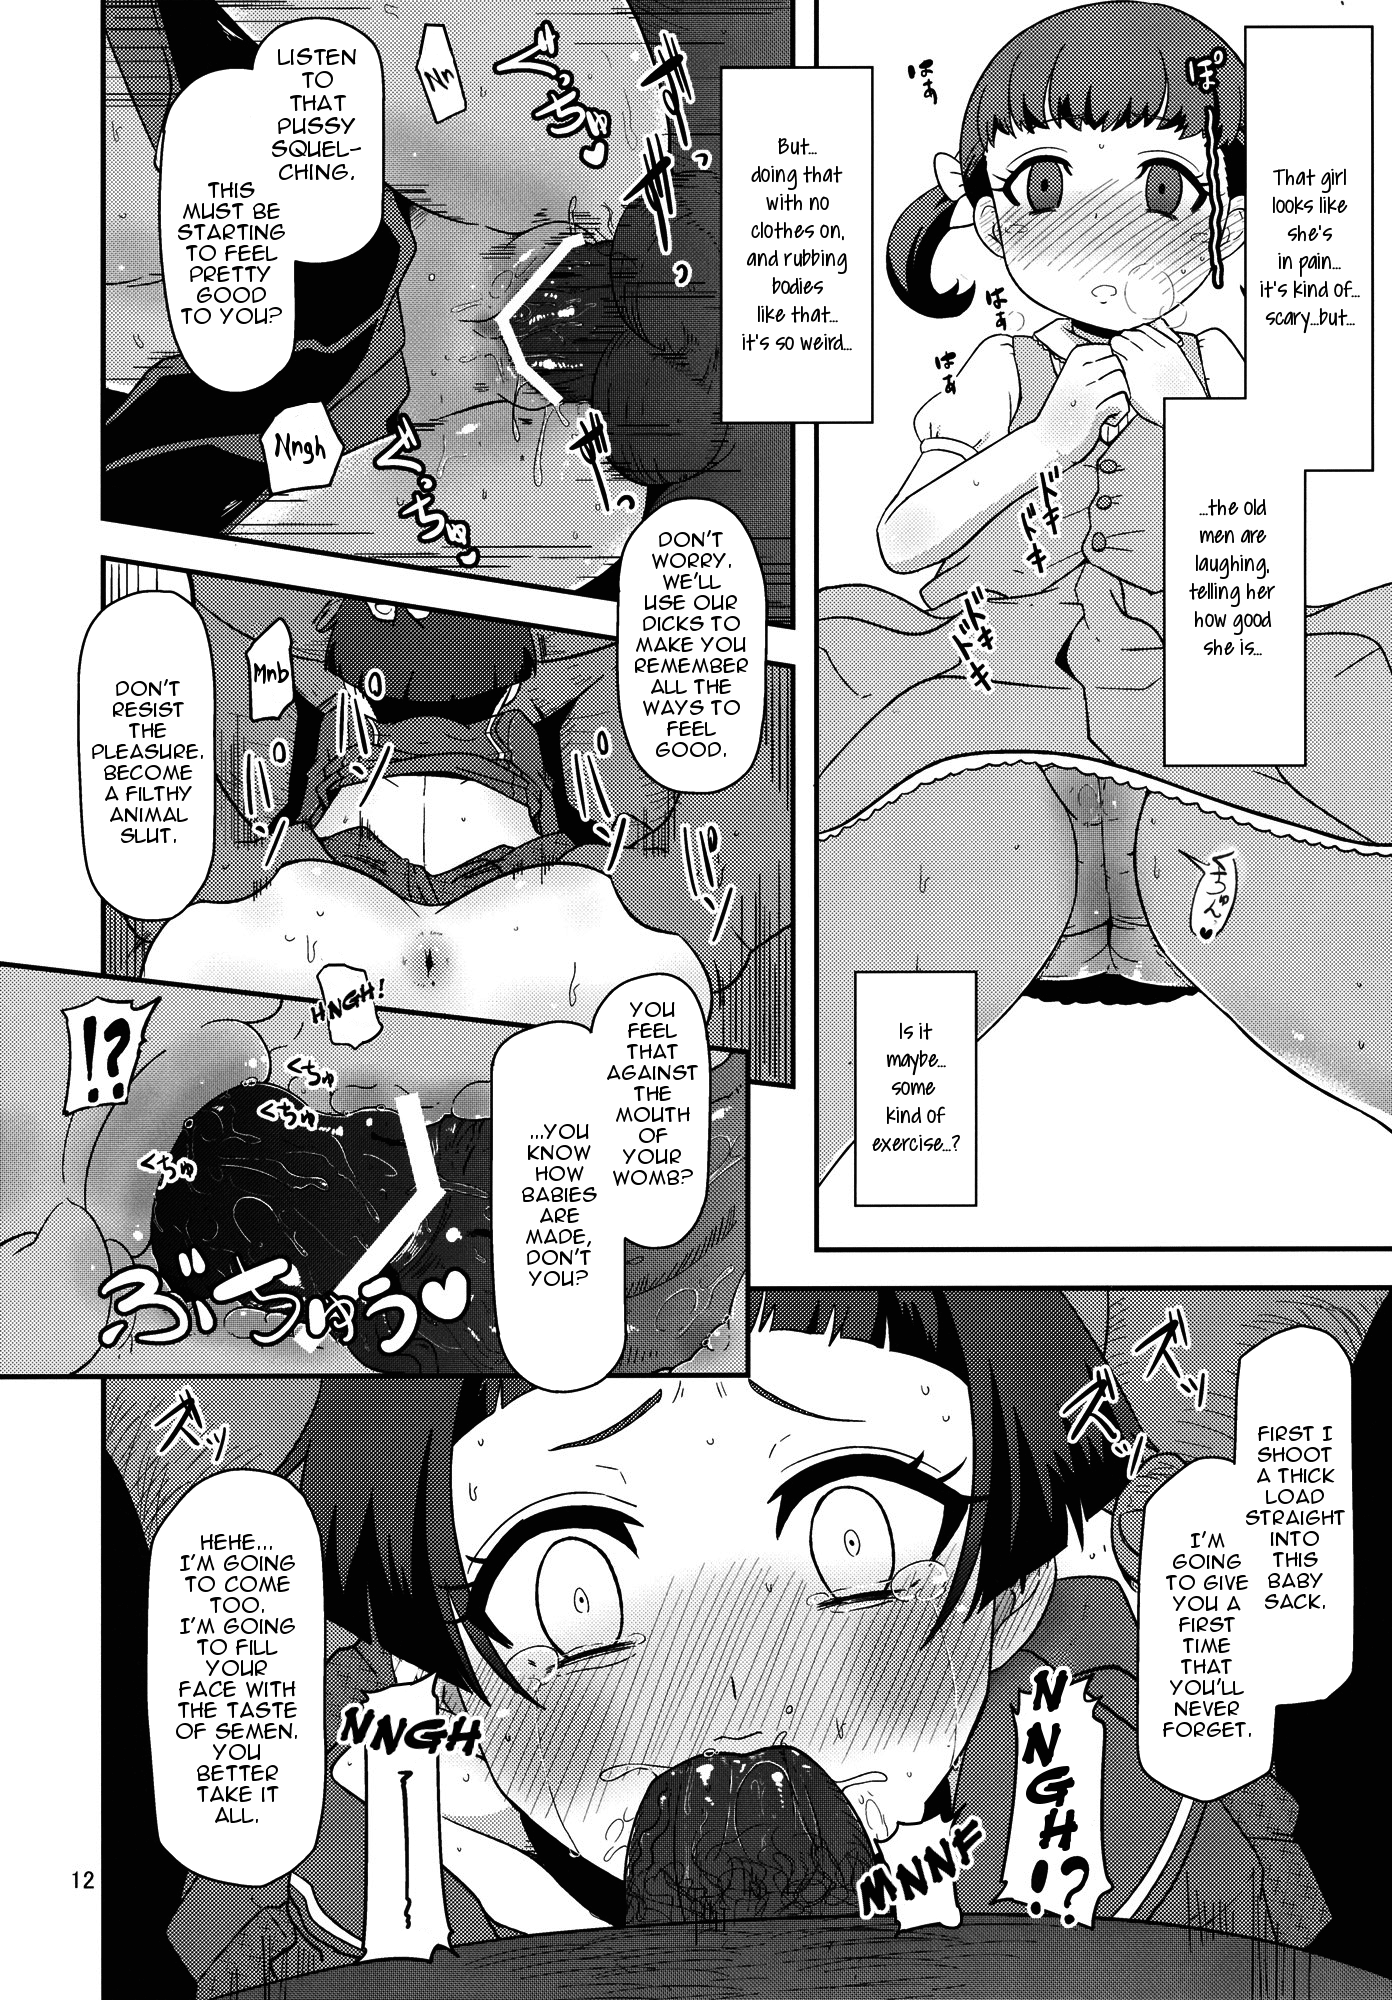 How to Become a Wife hentai manga picture 11